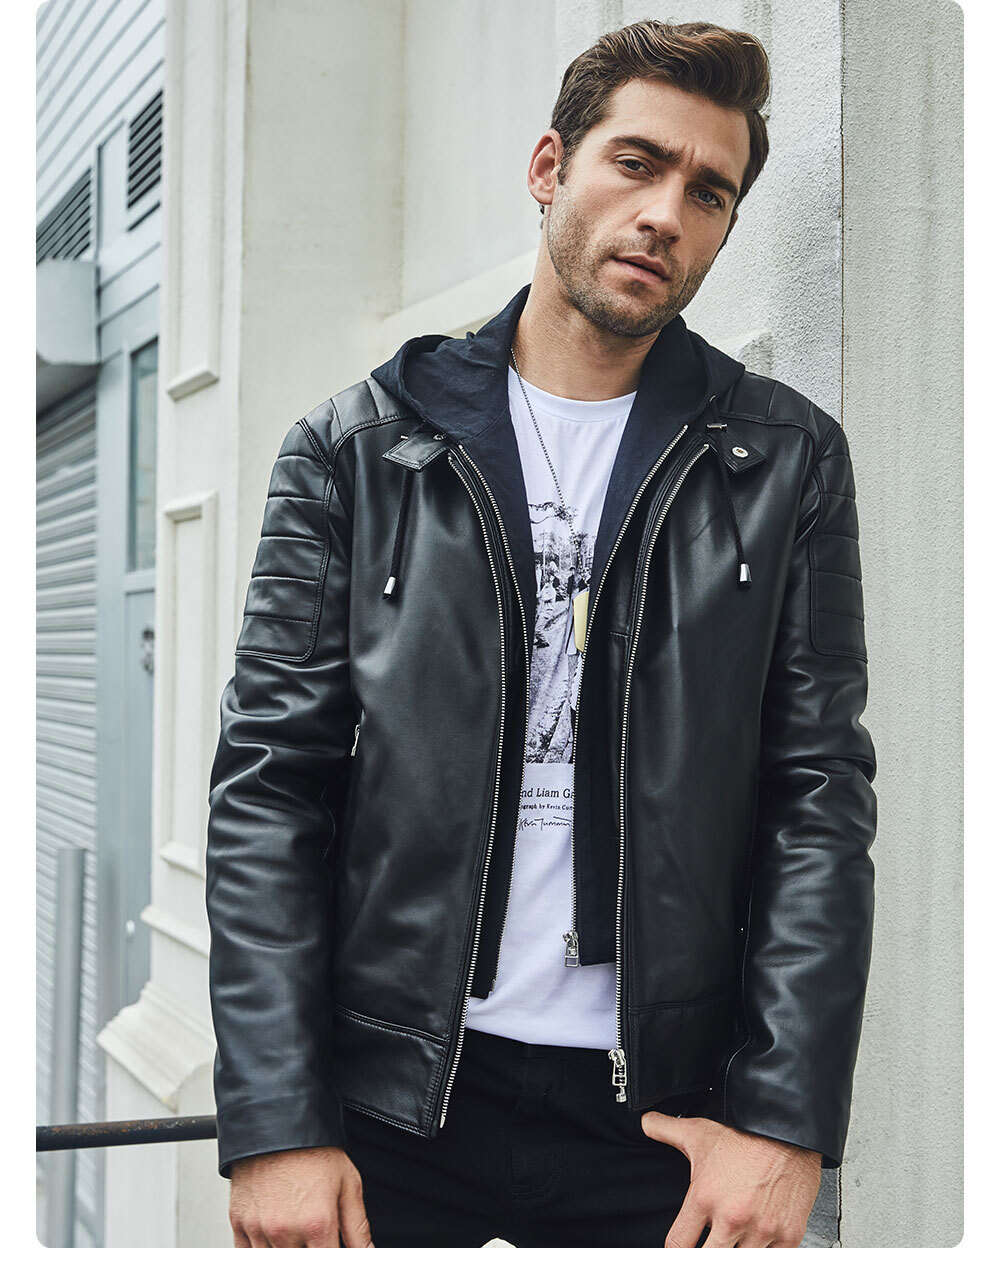 Men's Lambskin Leather Moto Jacket Hooded MXGX288 Fashion men's lambskin leather down jacket| 100% polyester removable hooded leather jacket